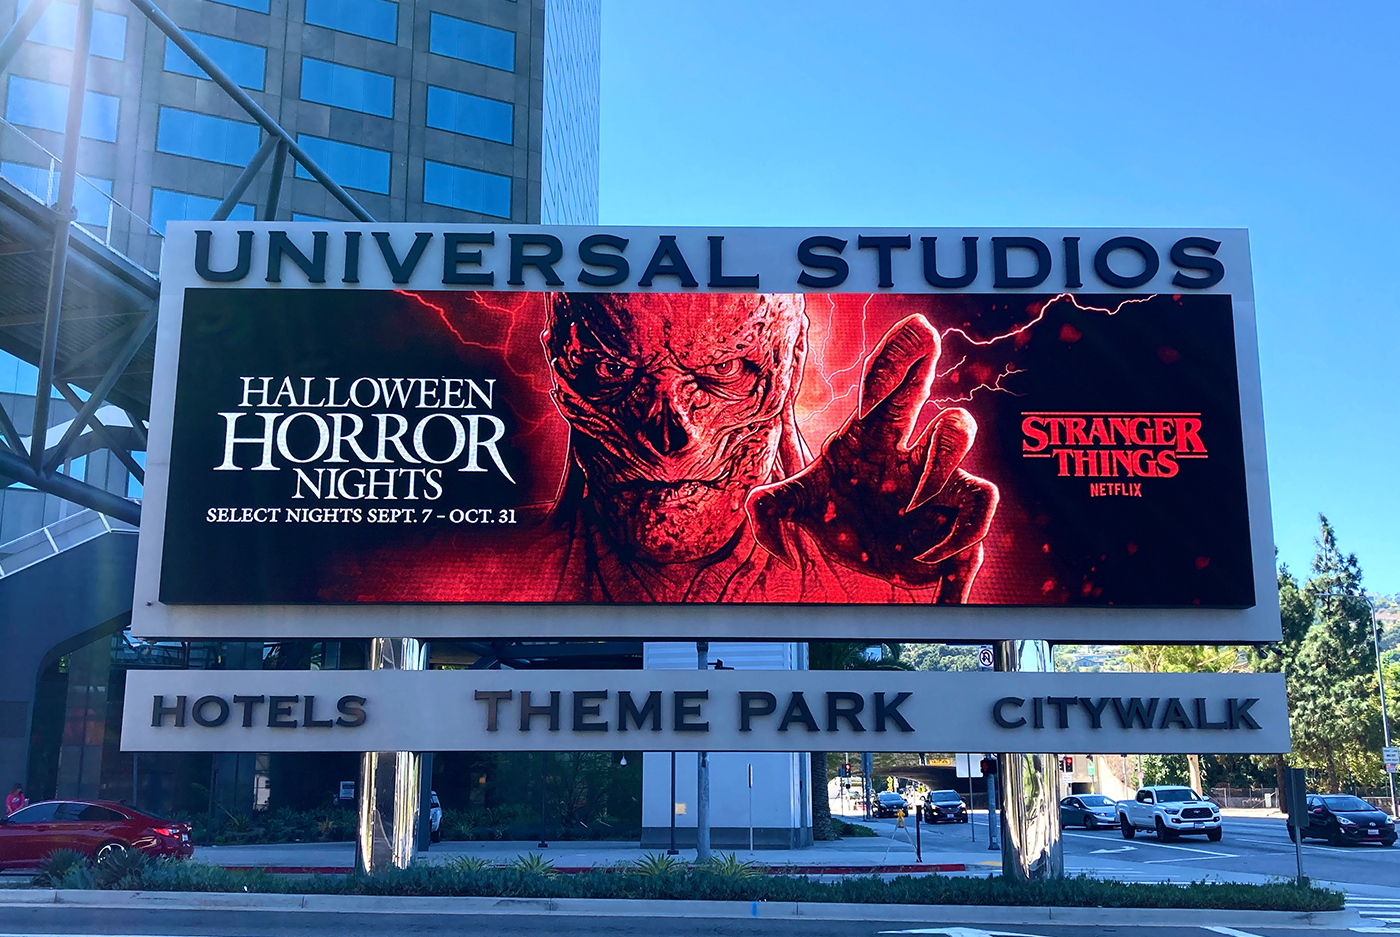 Stranger Things - Universal Studios Halloween Horror Nights - Universal Studios Entrance